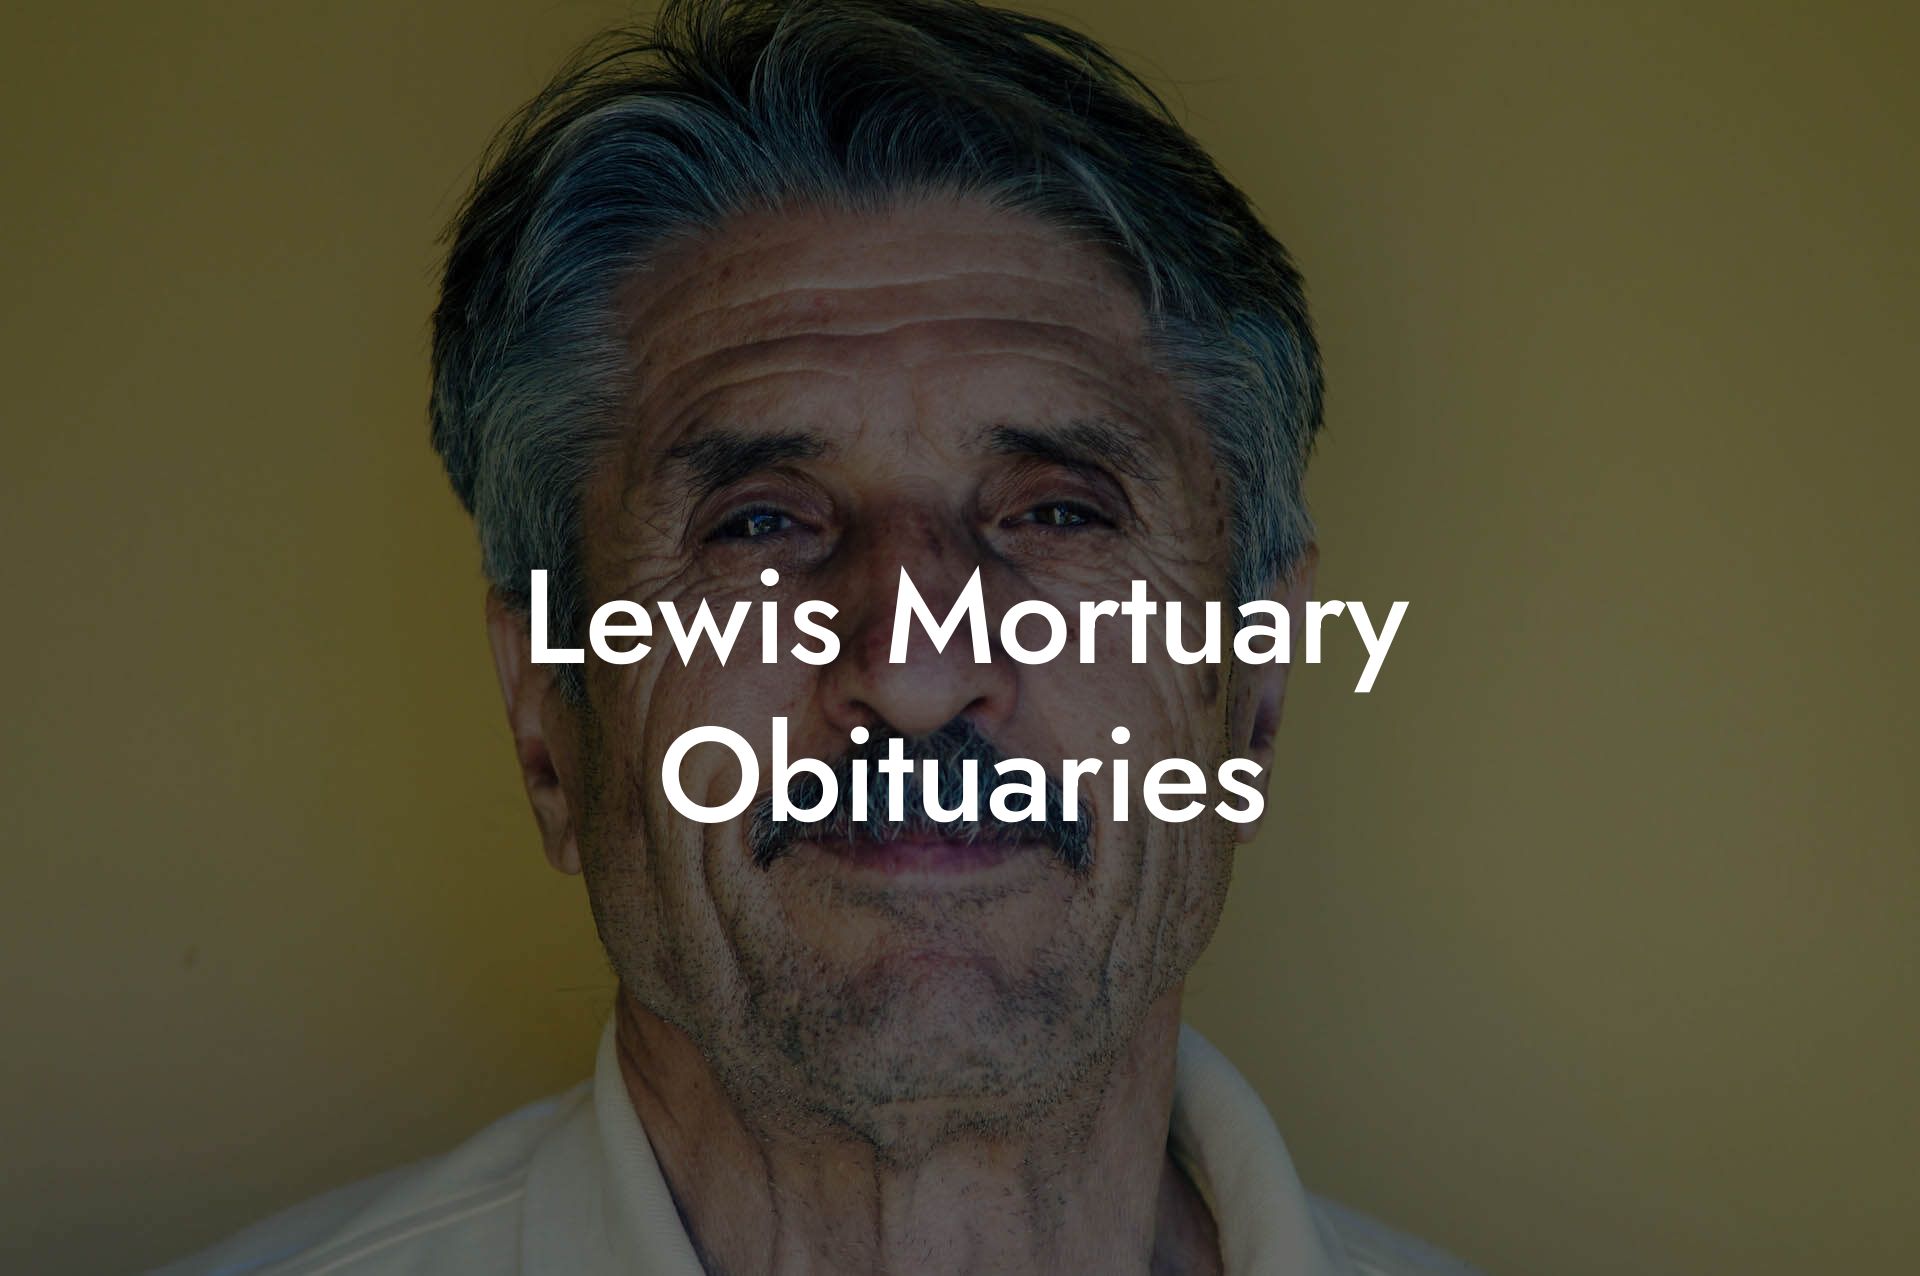 Lewis Mortuary Obituaries